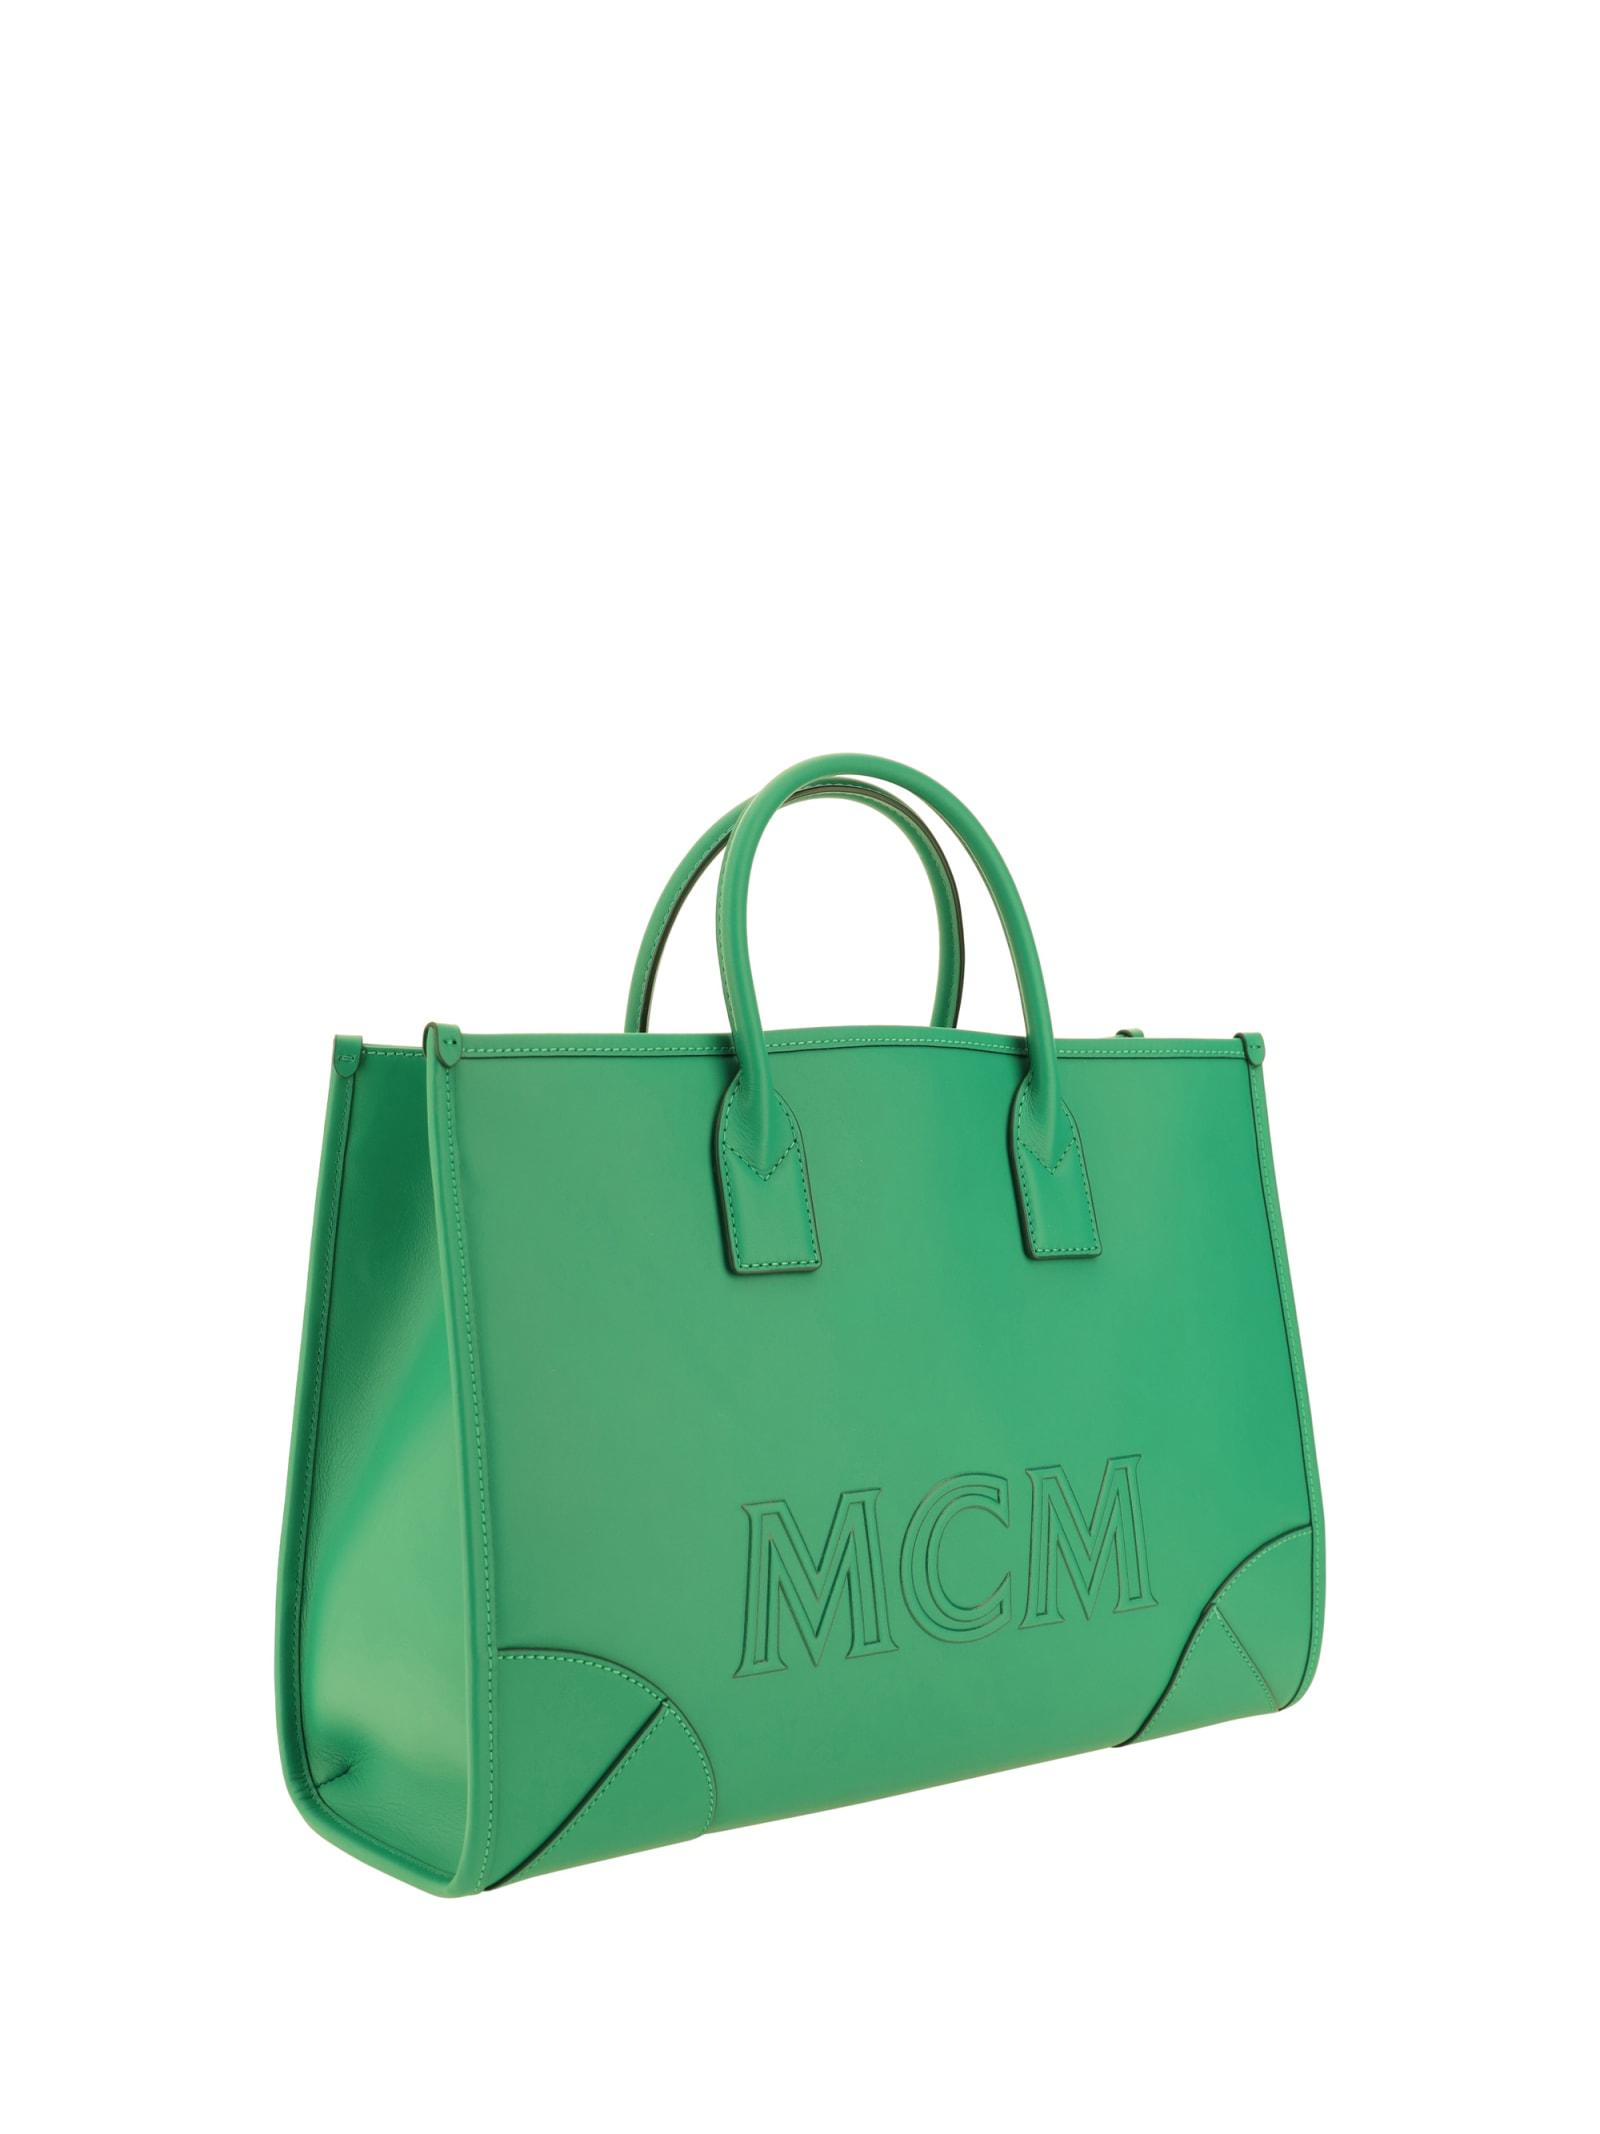 MCM Handbags in Green